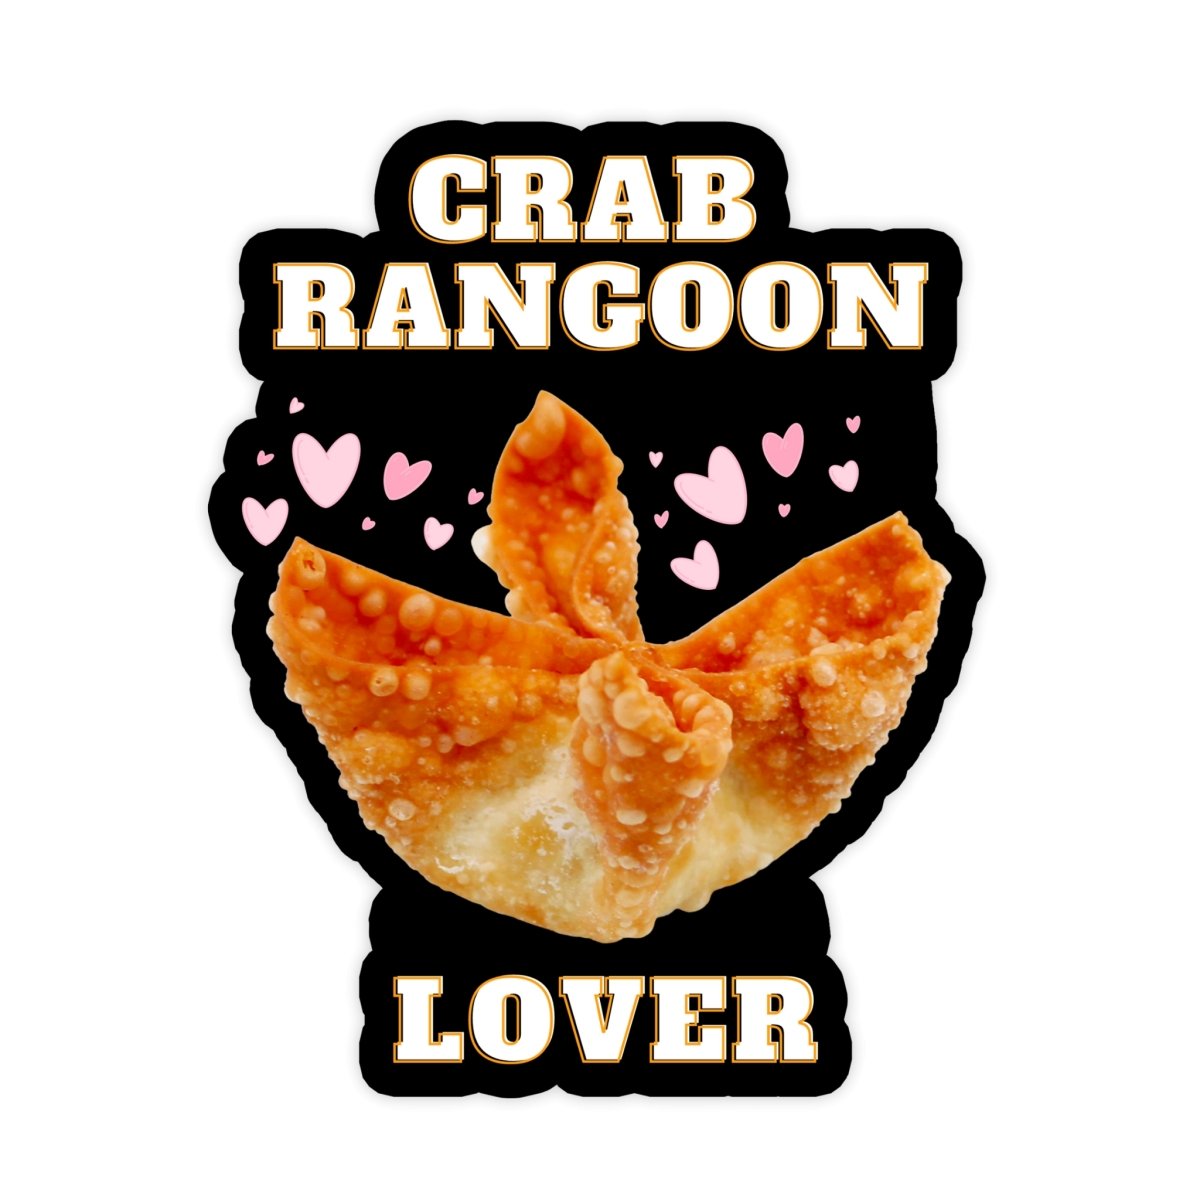 Crab Rangoon Lover Food Meme Sticker - stickerbullCrab Rangoon Lover Food Meme StickerRetail StickerstickerbullstickerbullCrabRangoon_Crab Rangoon Lover Food Meme Sticker